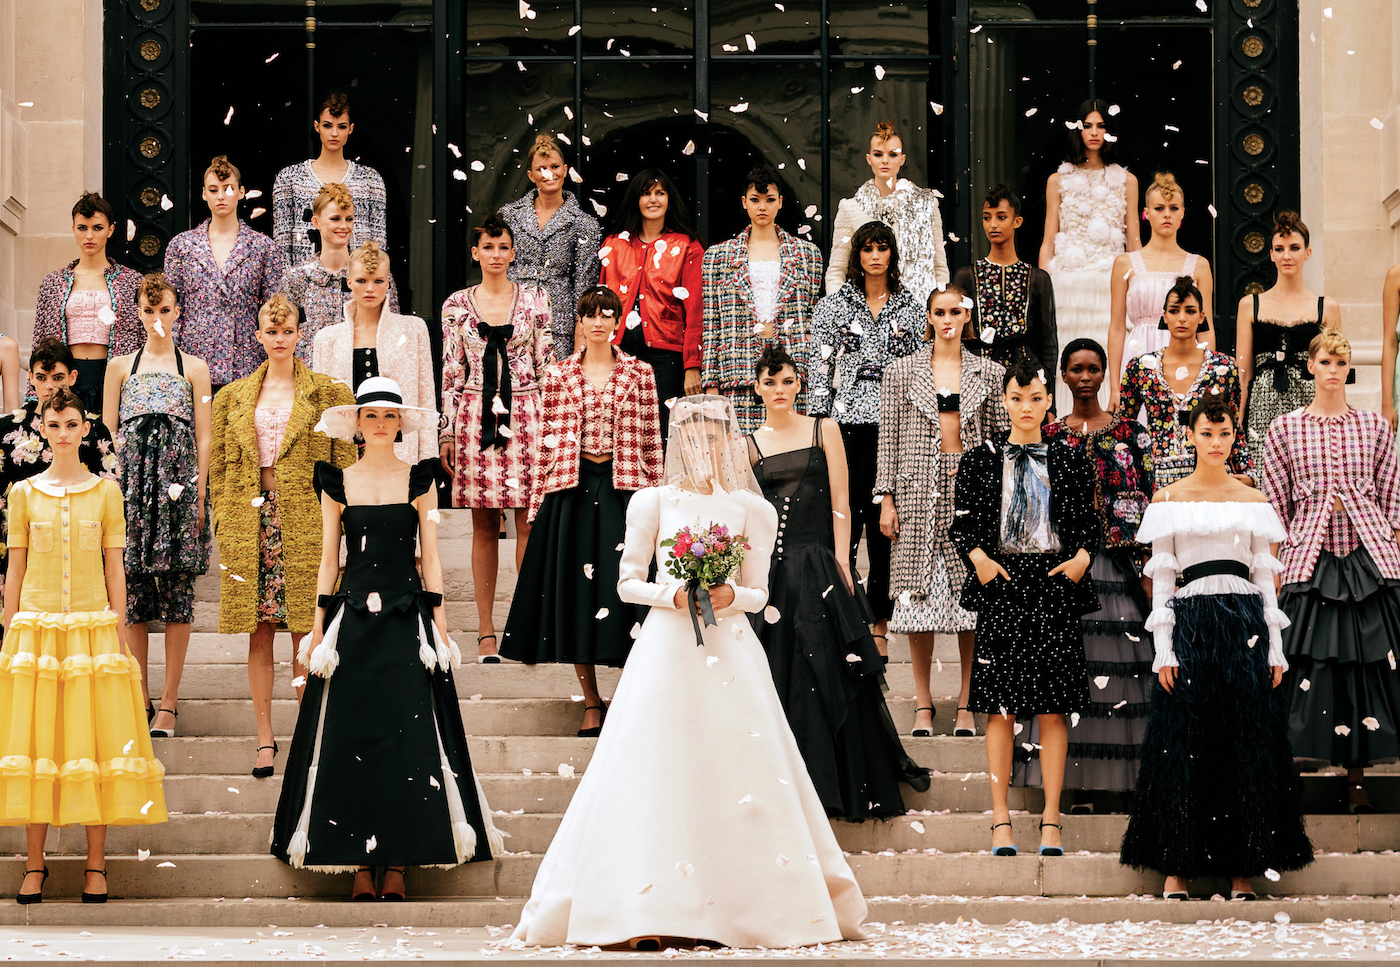 Chanel paints its Autumn/Winter 2021/2022 Haute Couture collection in  eternal romanticism